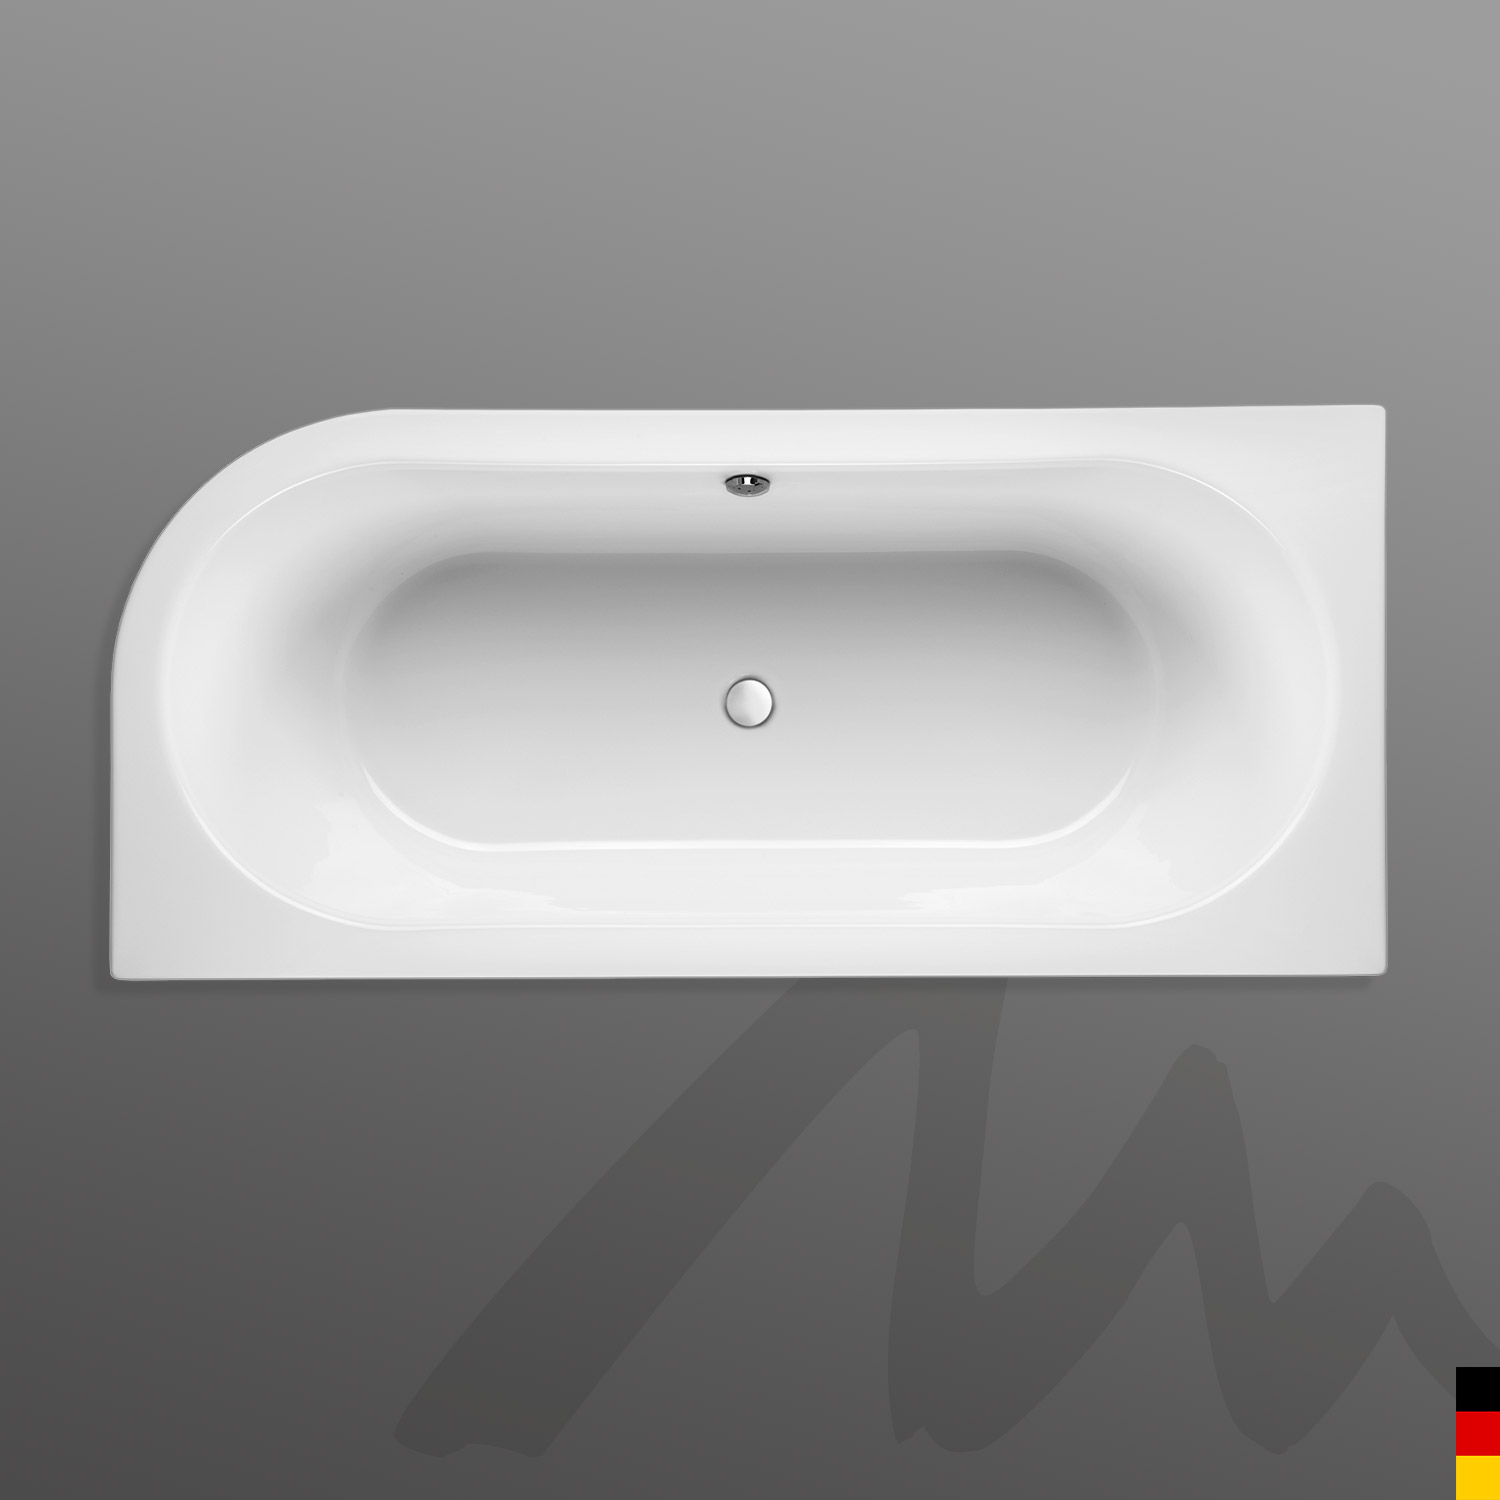 Mauersberger Badewanne Oval Primo 1 - 180/80 uno Ausführung rechts  180x80x45  Farbgruppe 3